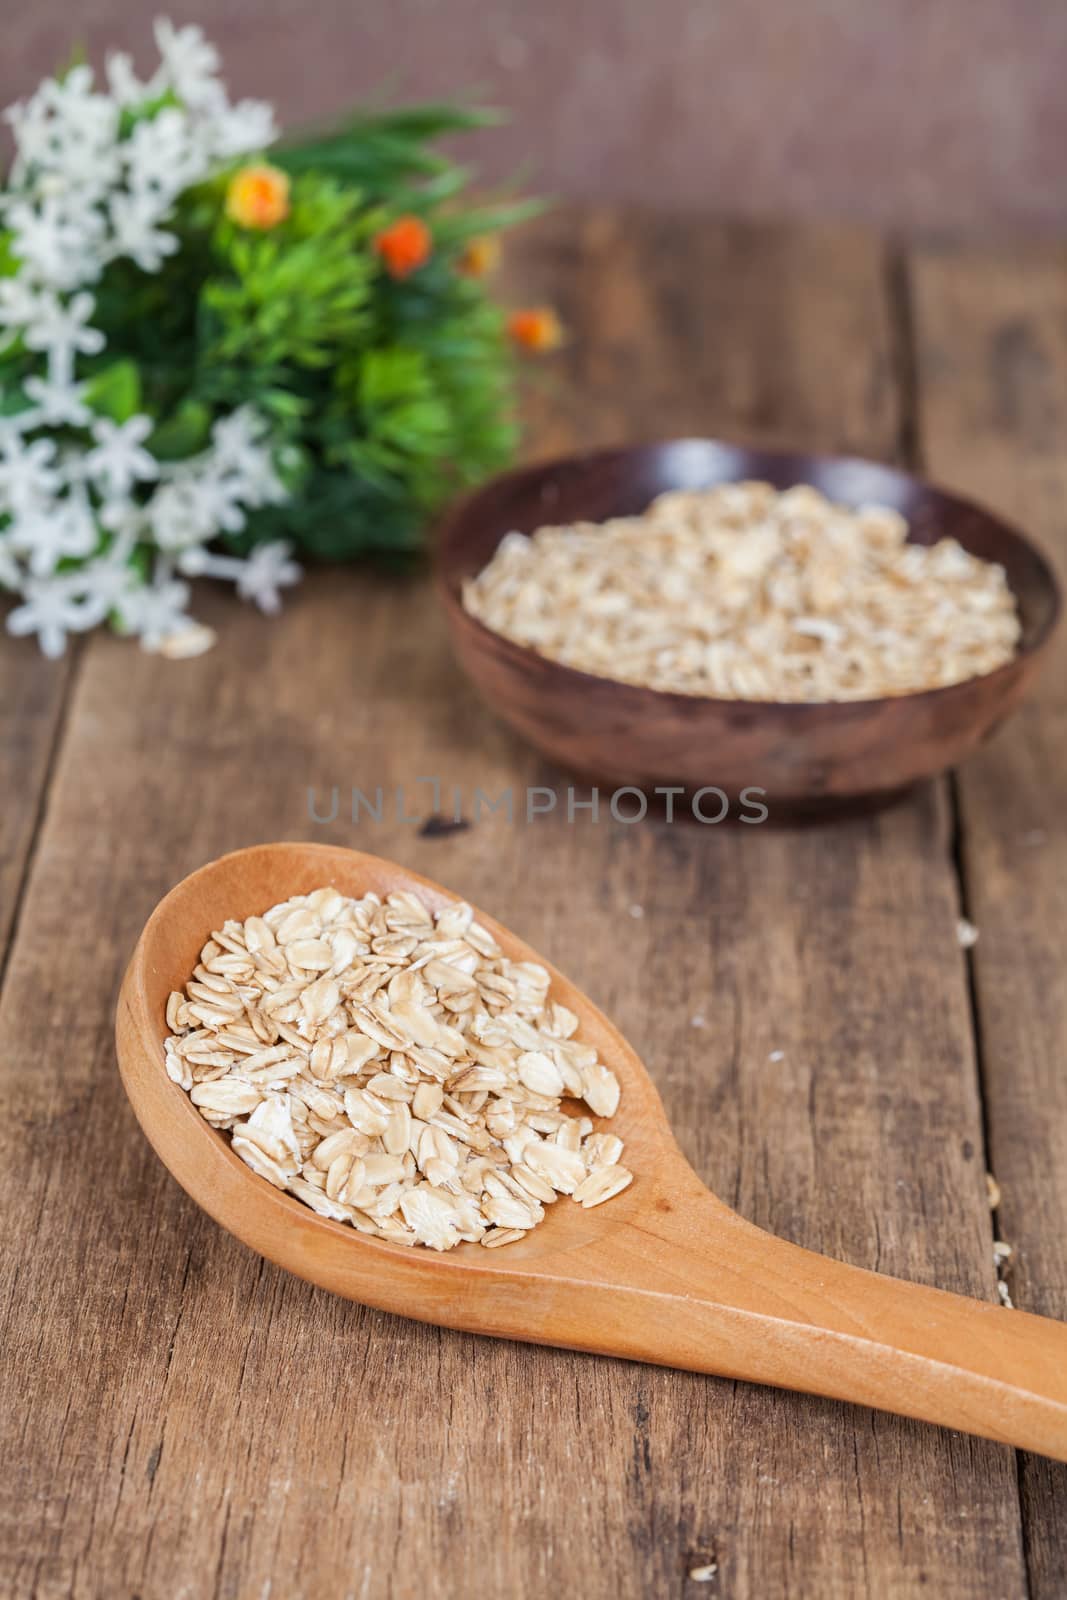 oats in spoon on wood table 